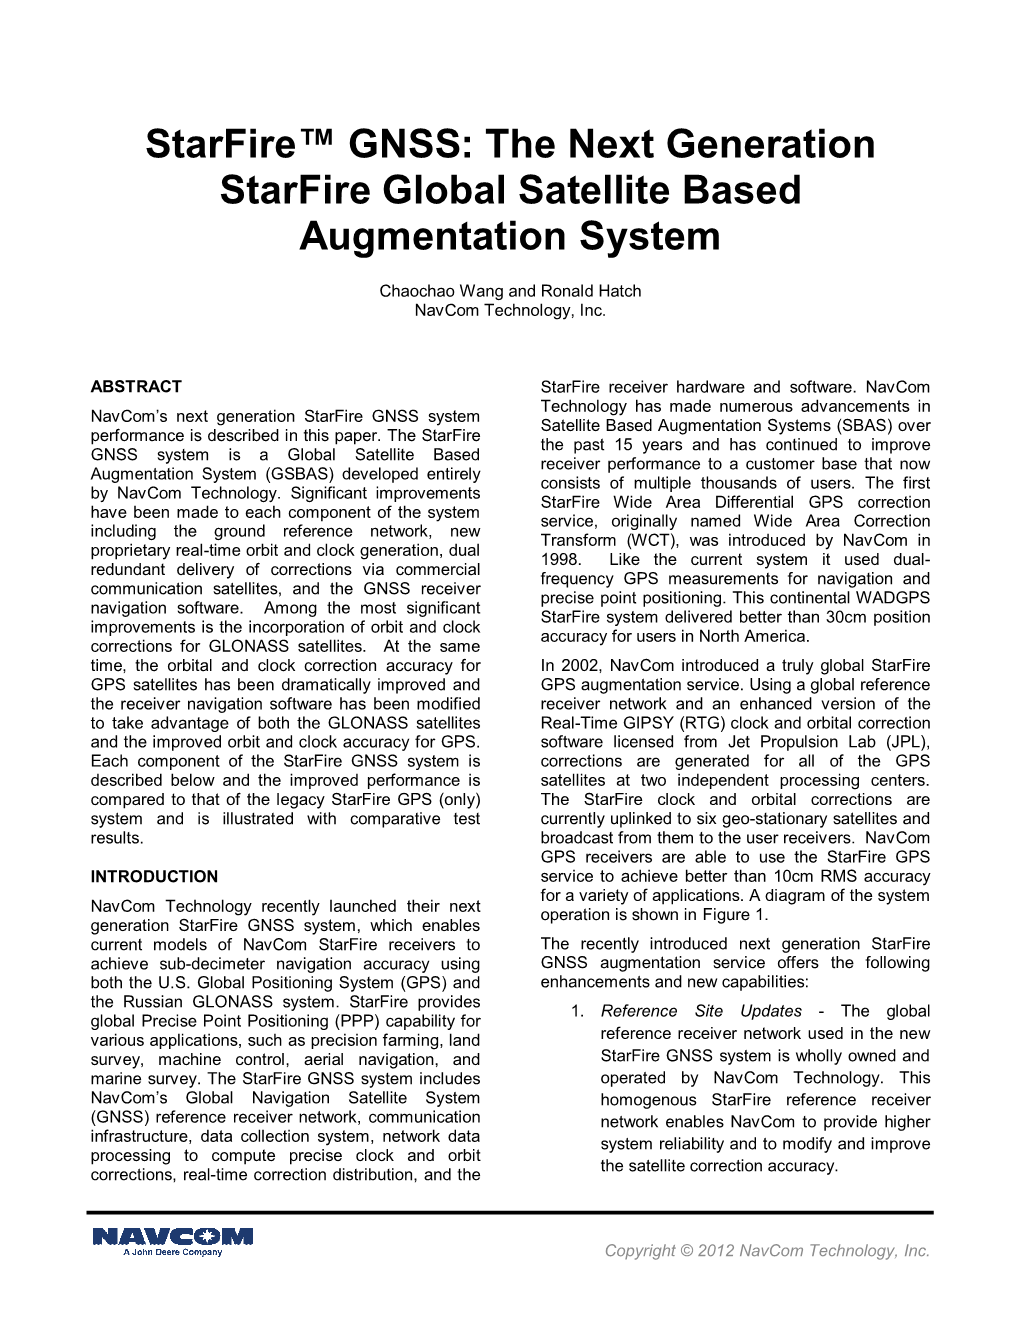 Starfire™ GNSS: the Next Generation Starfire Global Satellite Based Augmentation System